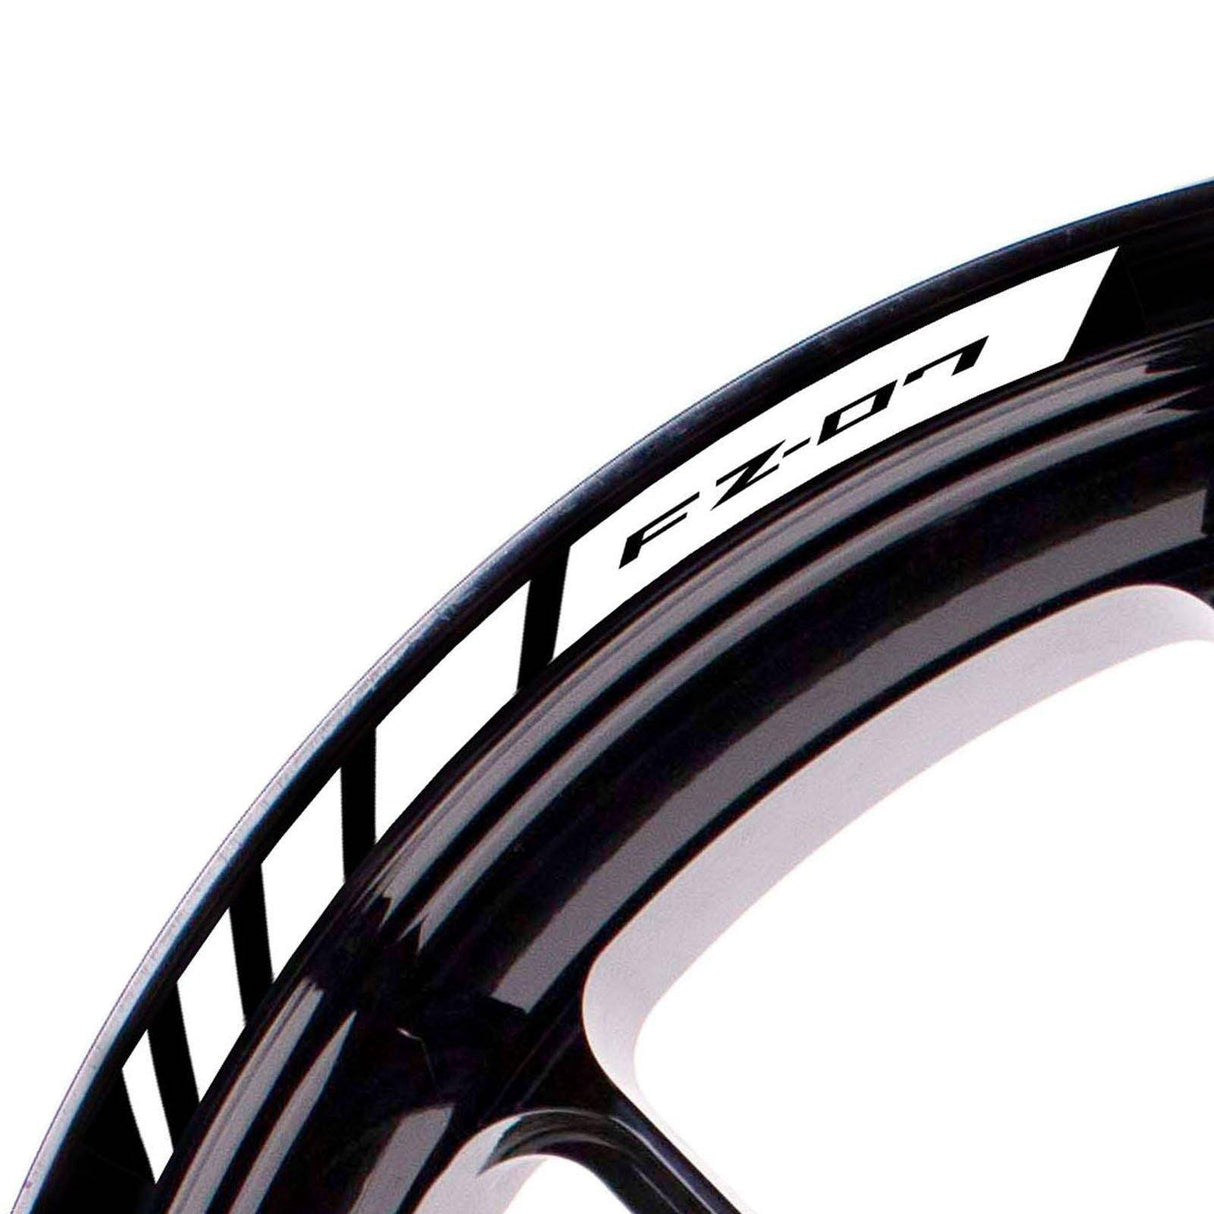 For Yamaha FZ07 Logo 17 inch Rim Wheel Stickers MM01B Rim Edge Tapes.